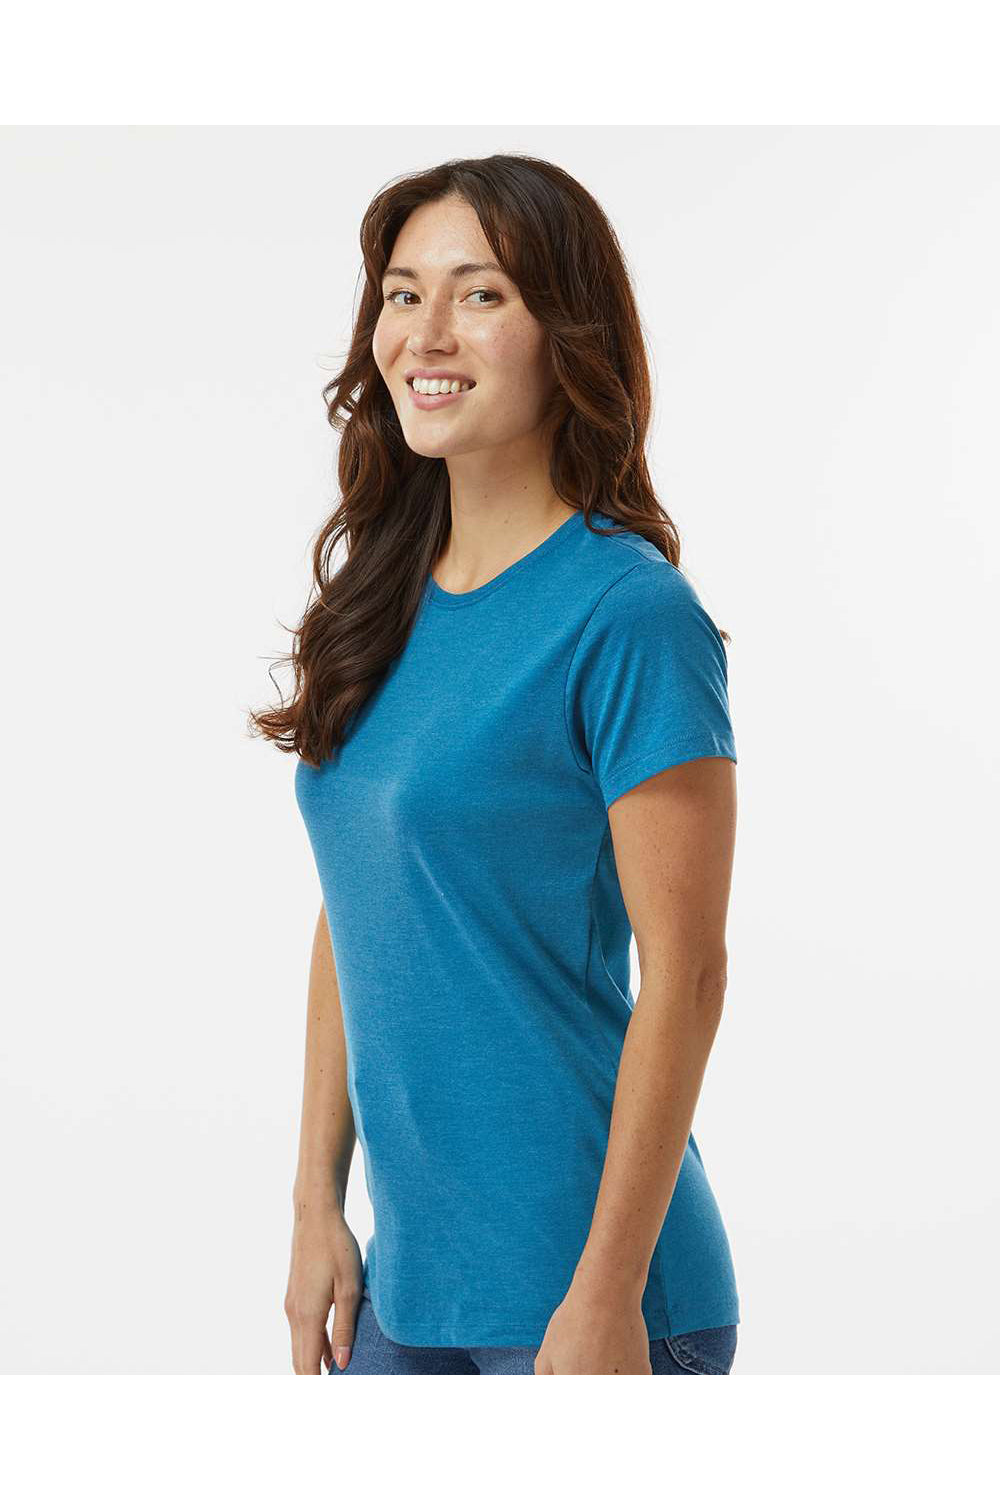 Kastlfel 2021 Womens RecycledSoft Short Sleeve Crewneck T-Shirt Breaker Blue Model Side